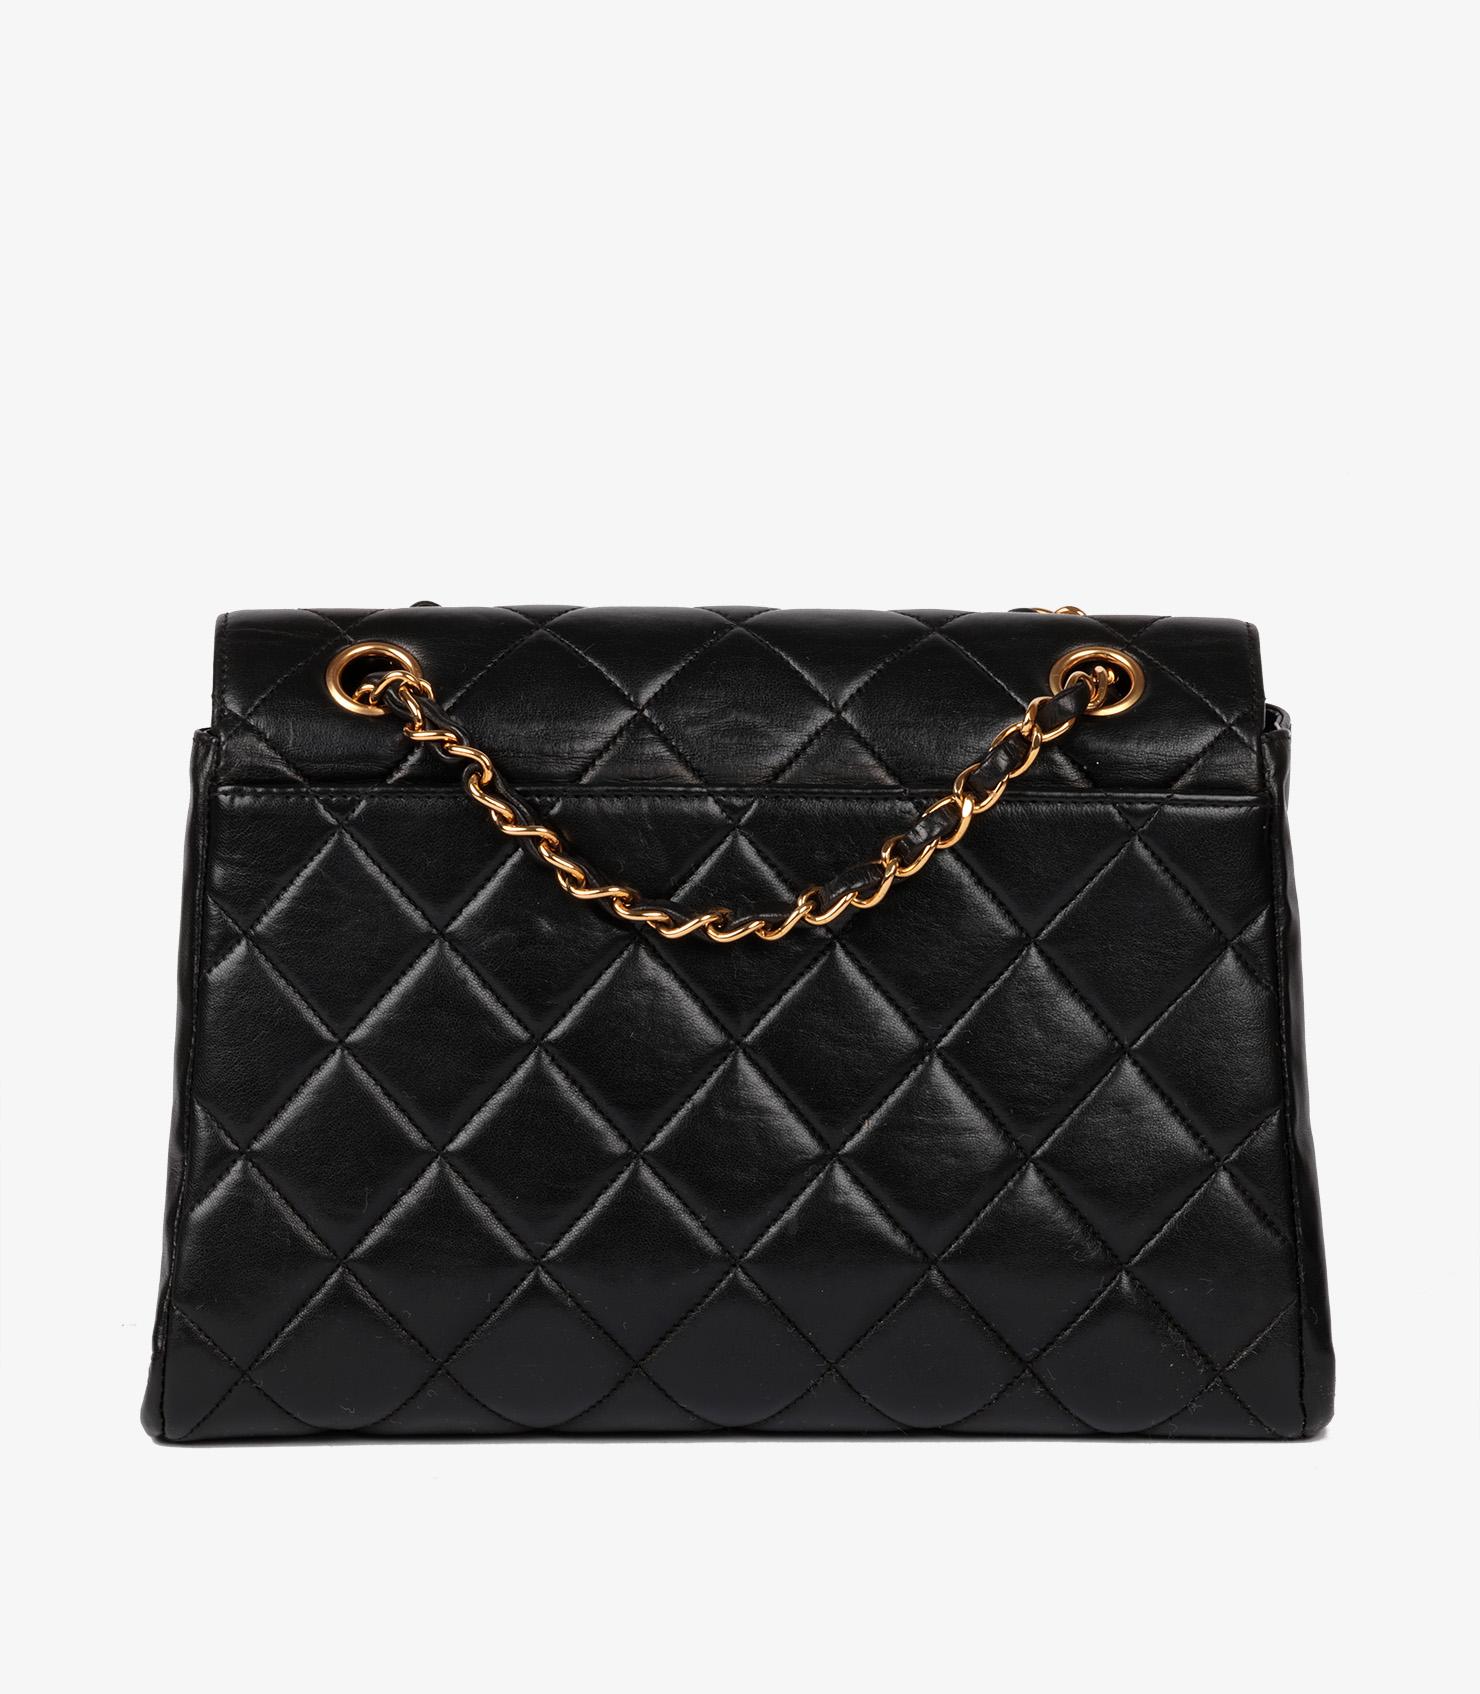 Chanel Black Quilted Lambskin Vintage Medium Envelope Classic Single Flap Bag 1